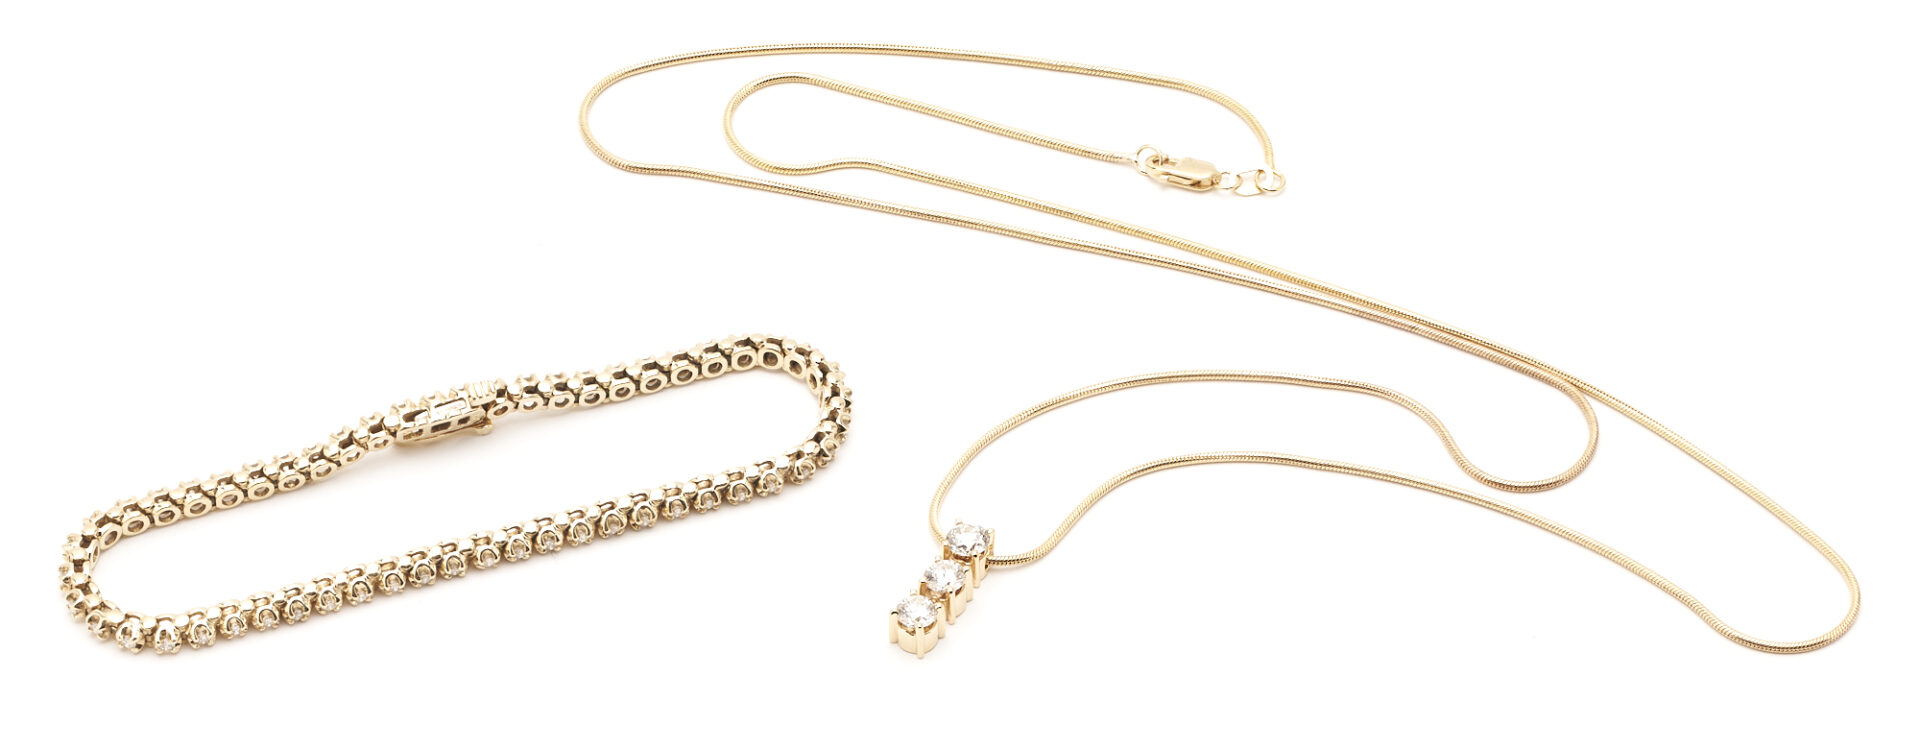 Lot 64: 2 14K Diamond Items, Tennis Bracelet & Necklace